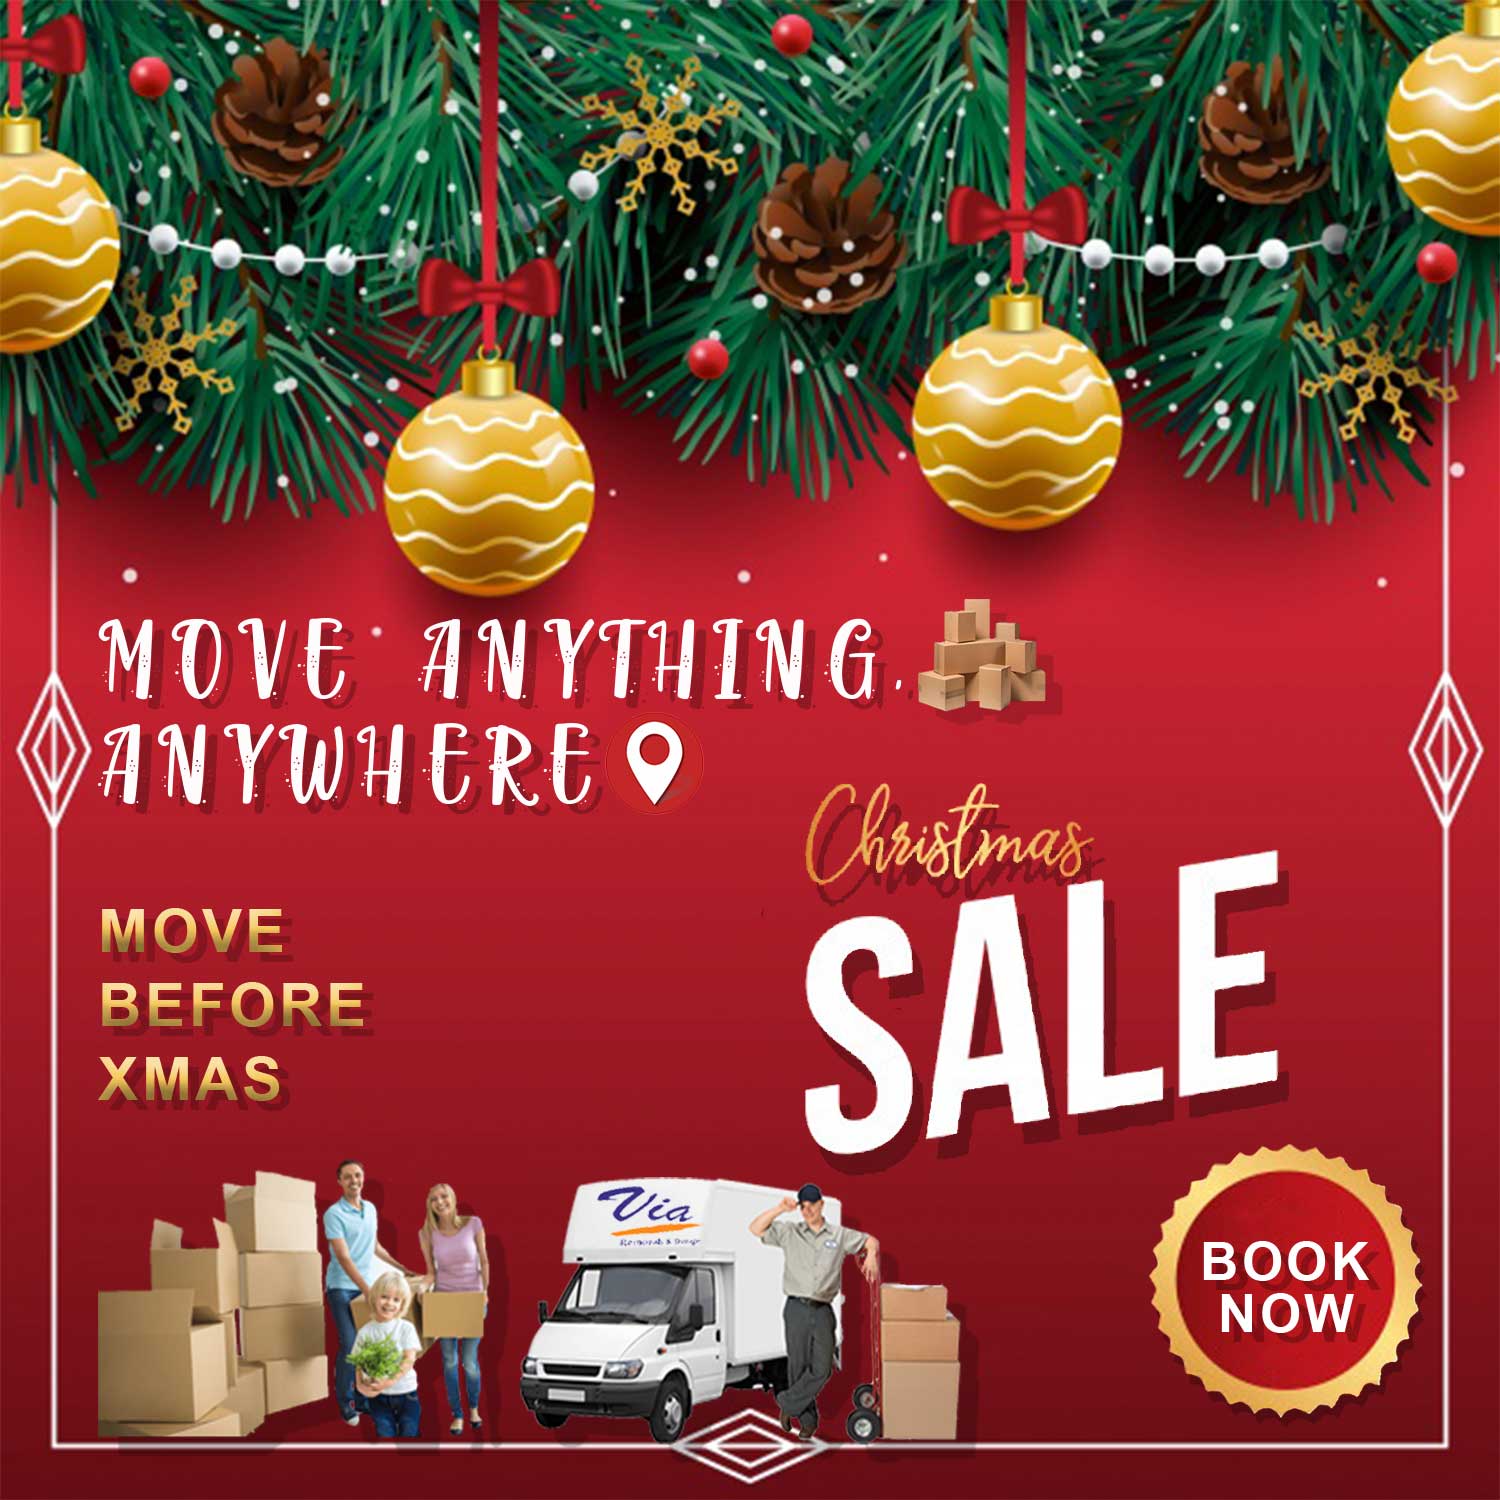 Move anything anywhere Christmas sale